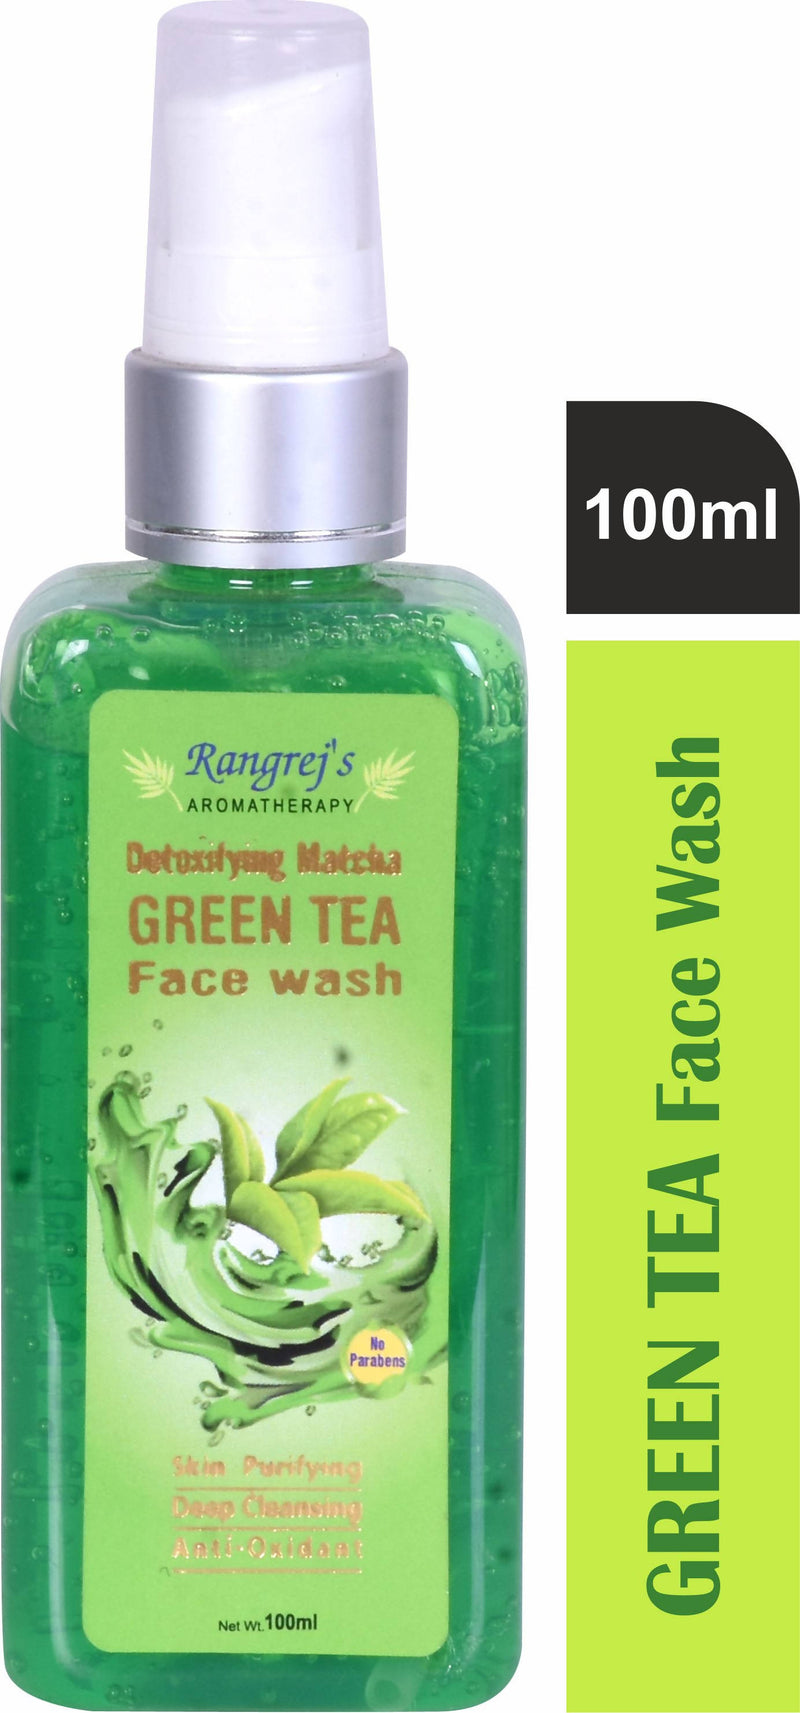 Rangrej's Aromatherapy Detoxifying matcha green tea face wash